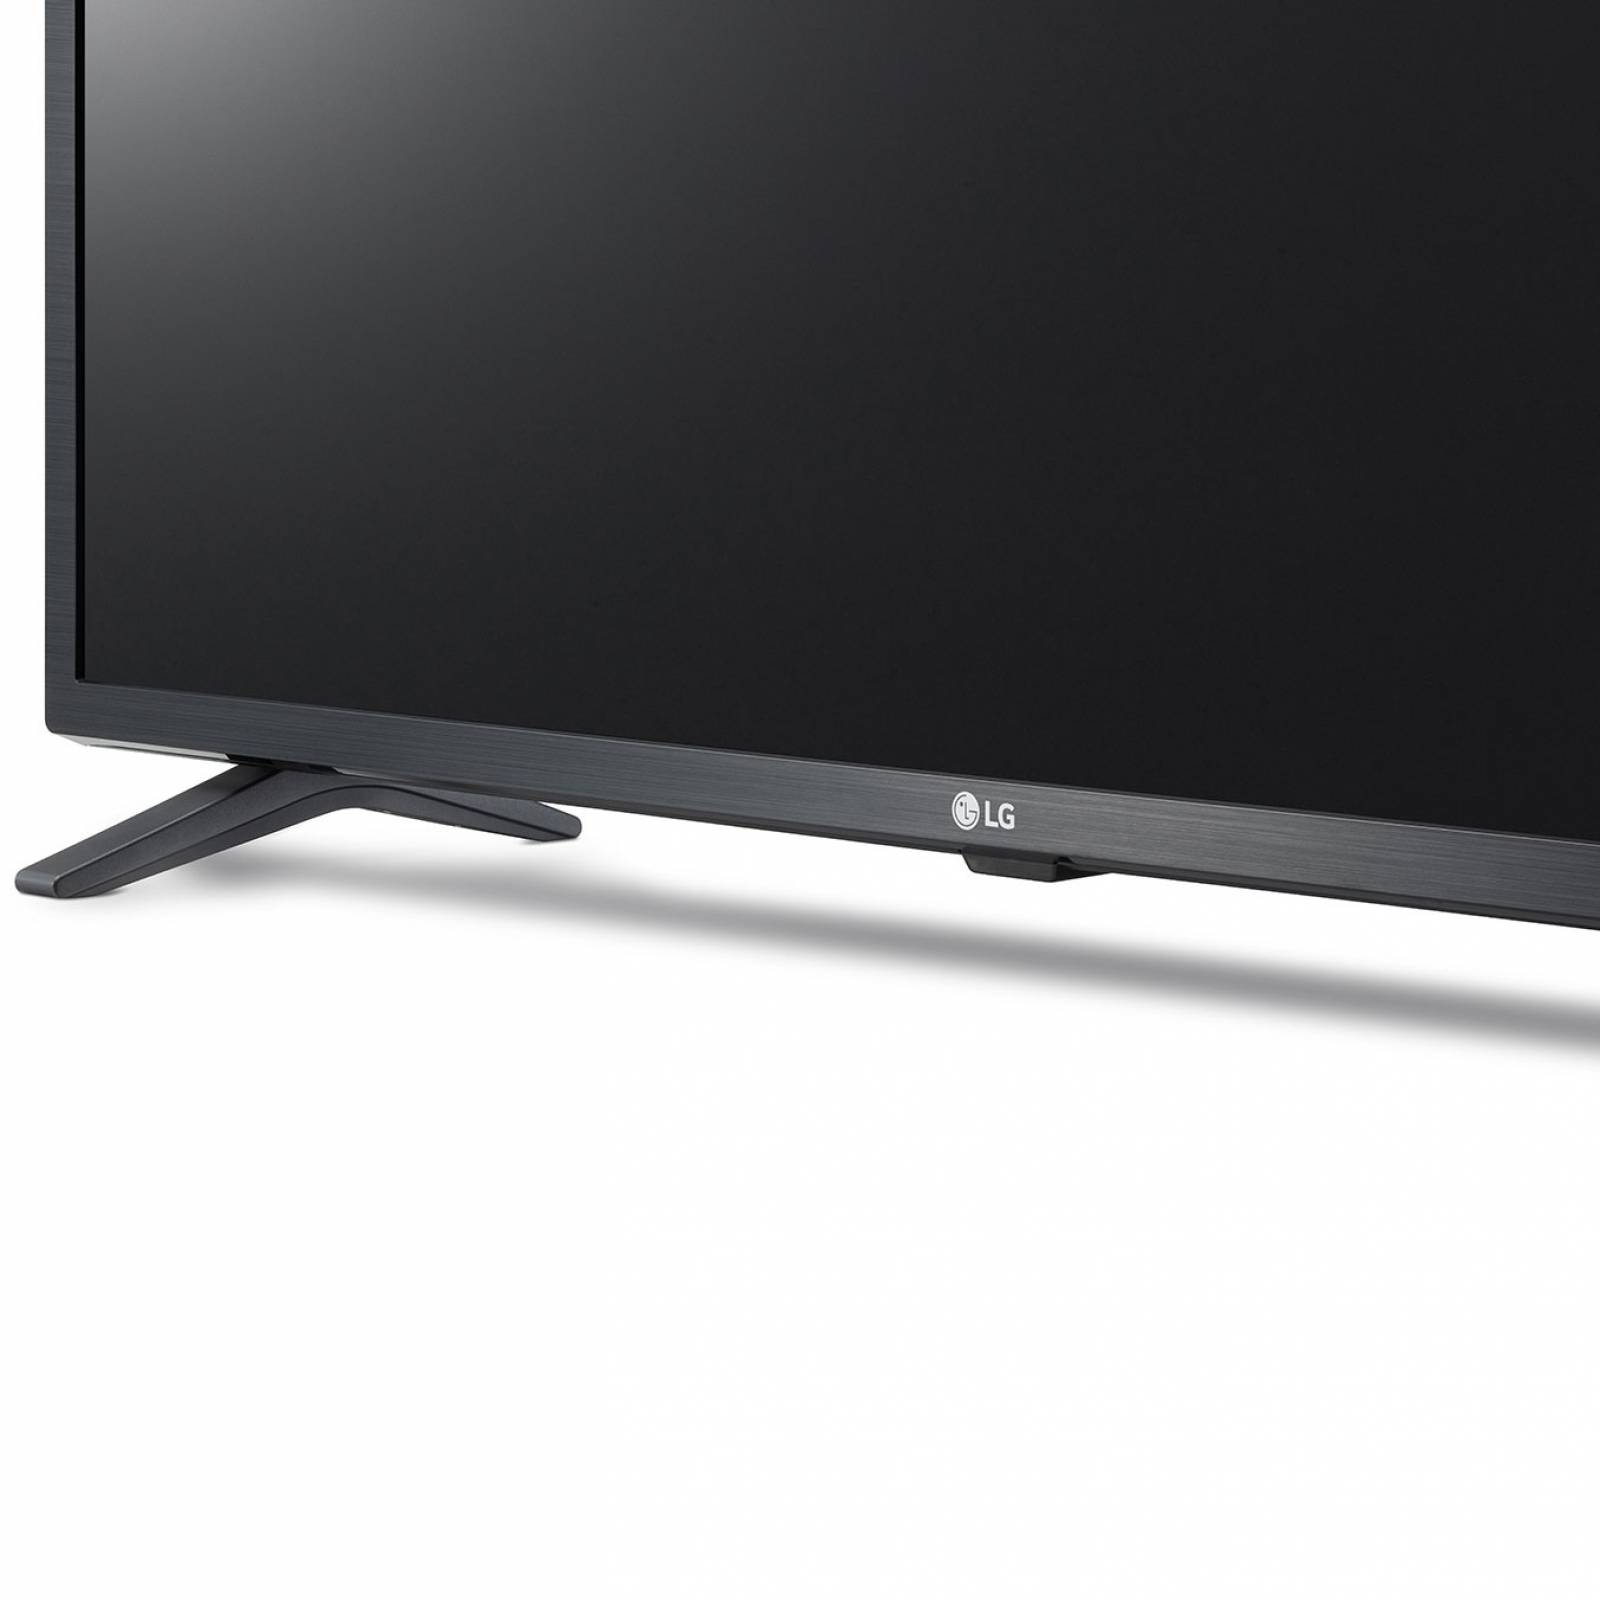 Smart TV LG 32 HD Active HDR WebOS Bluetooth 32LM630BPUB